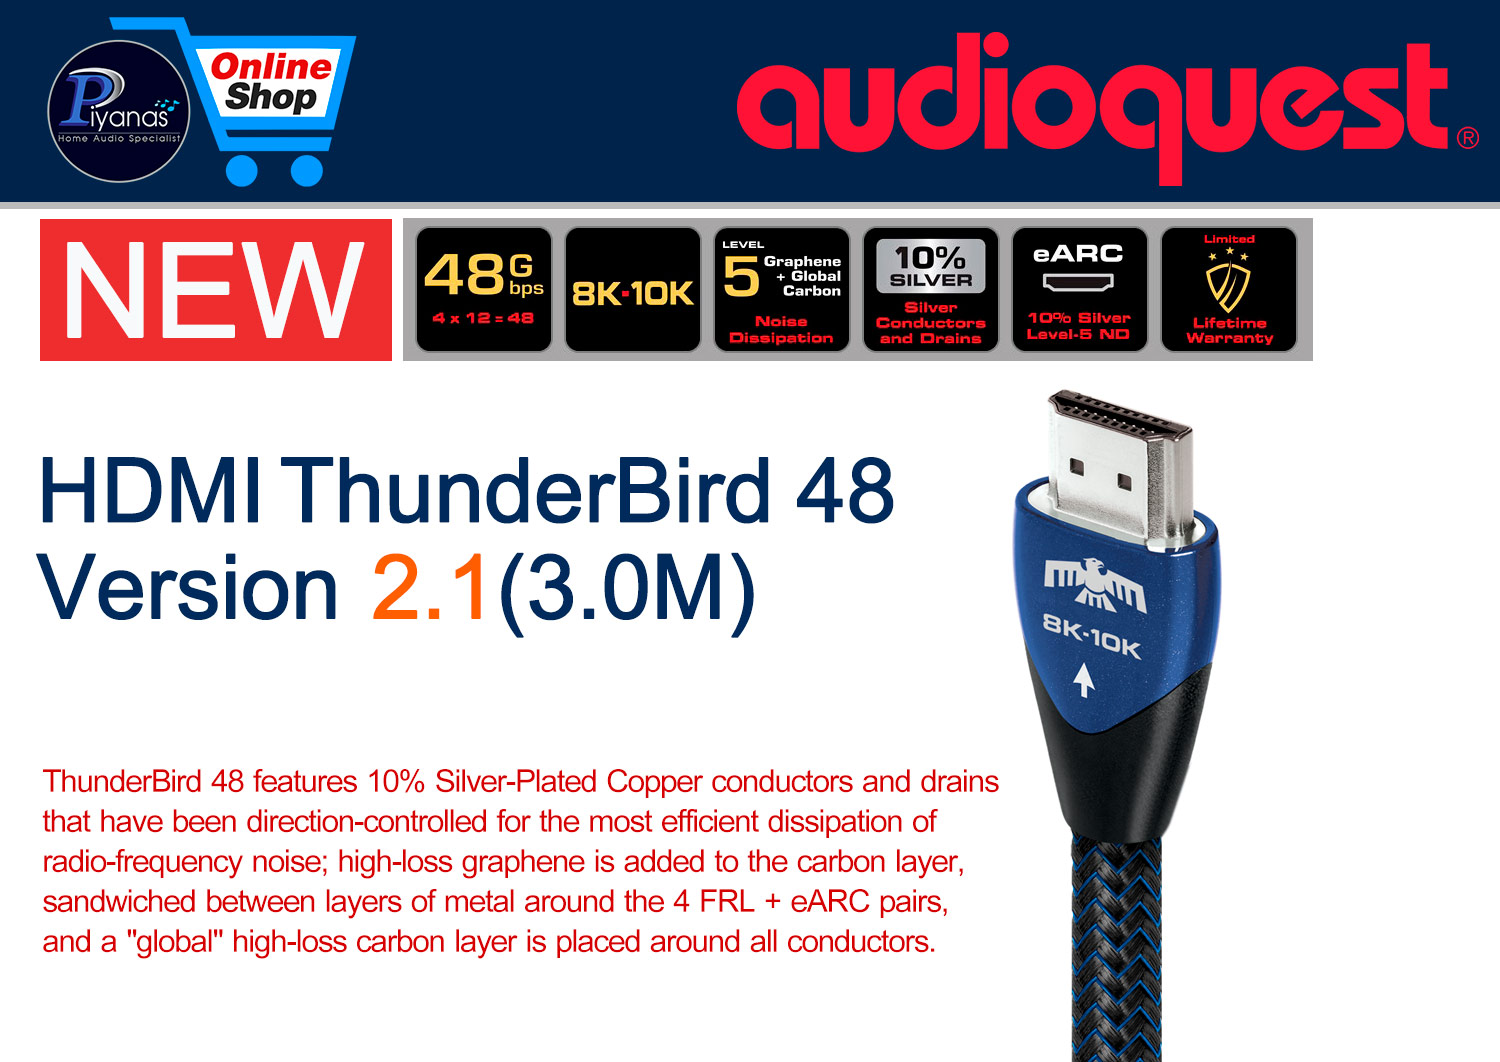 HDMI-ThunderBird 48 Version 2.1 (3.0M)